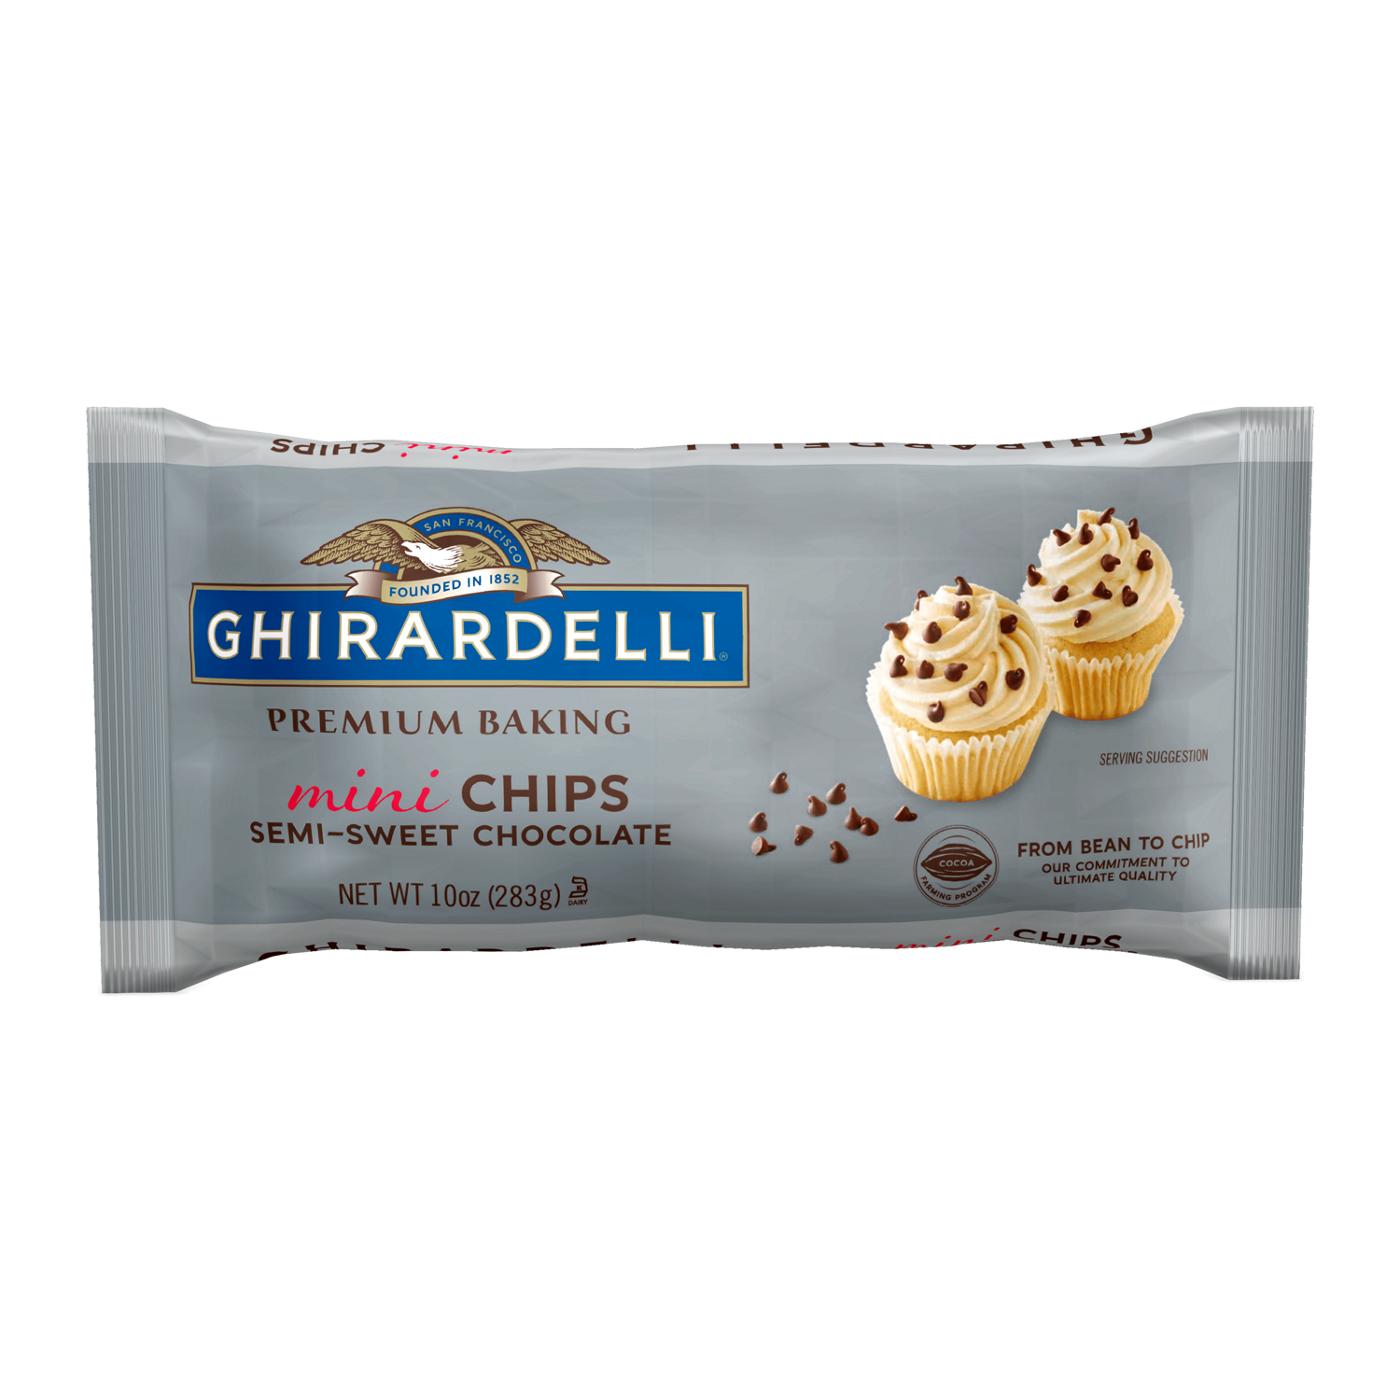 Ghirardelli Mini Semi-Sweet Chocolate Premium Baking Chips; image 1 of 7